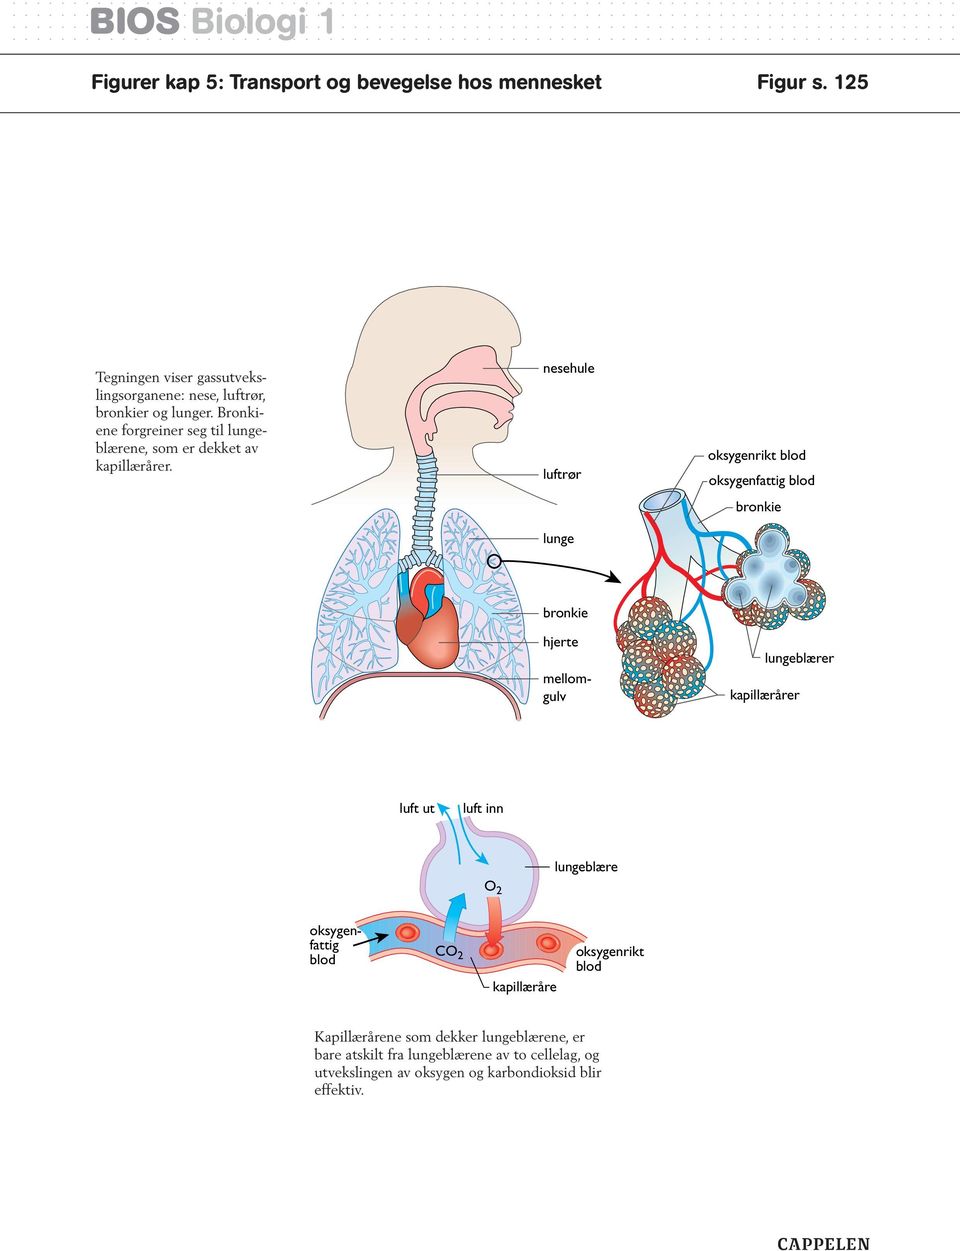 nesehule luftrør lunge oksygenrikt blod oksygenfattig blod bronkie bronkie hjerte mellomgulv lungeblærer kapillærårer luft ut luft inn